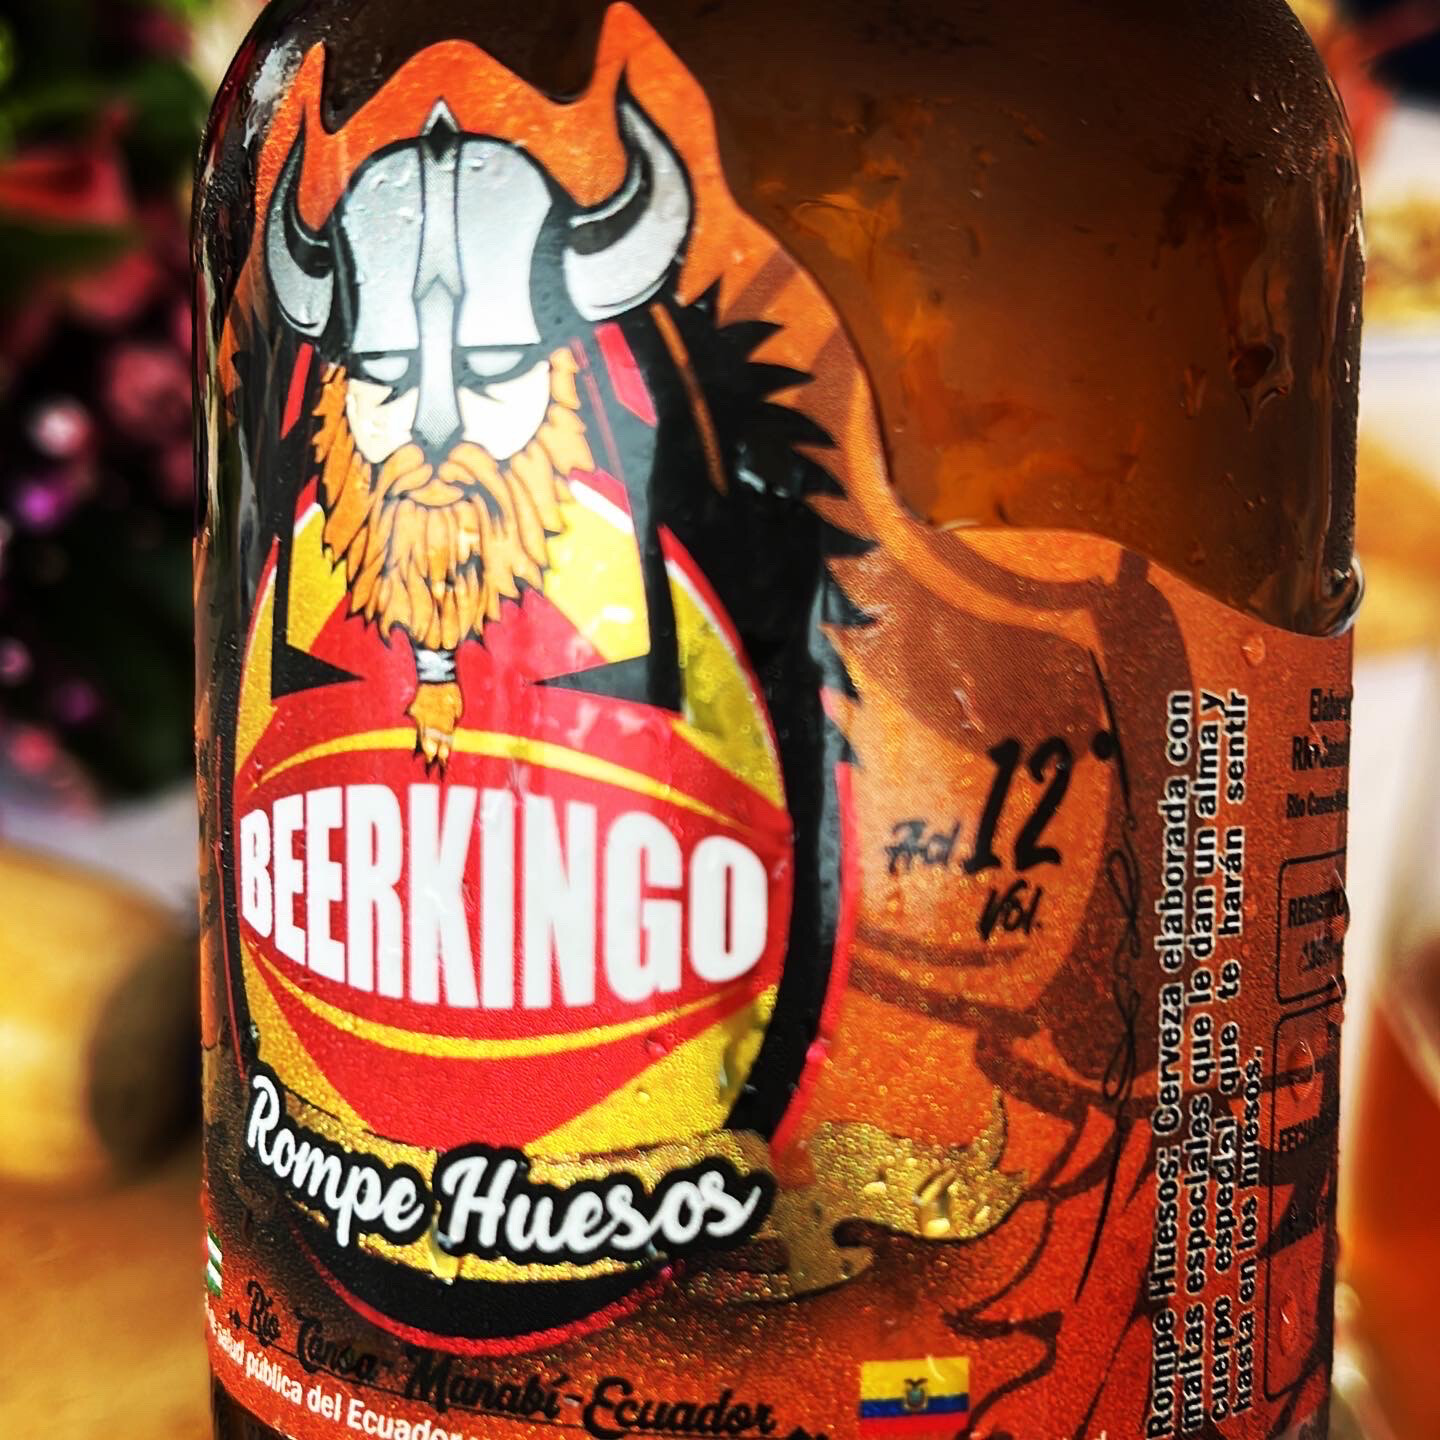 Beerkingo Rompe Hueso